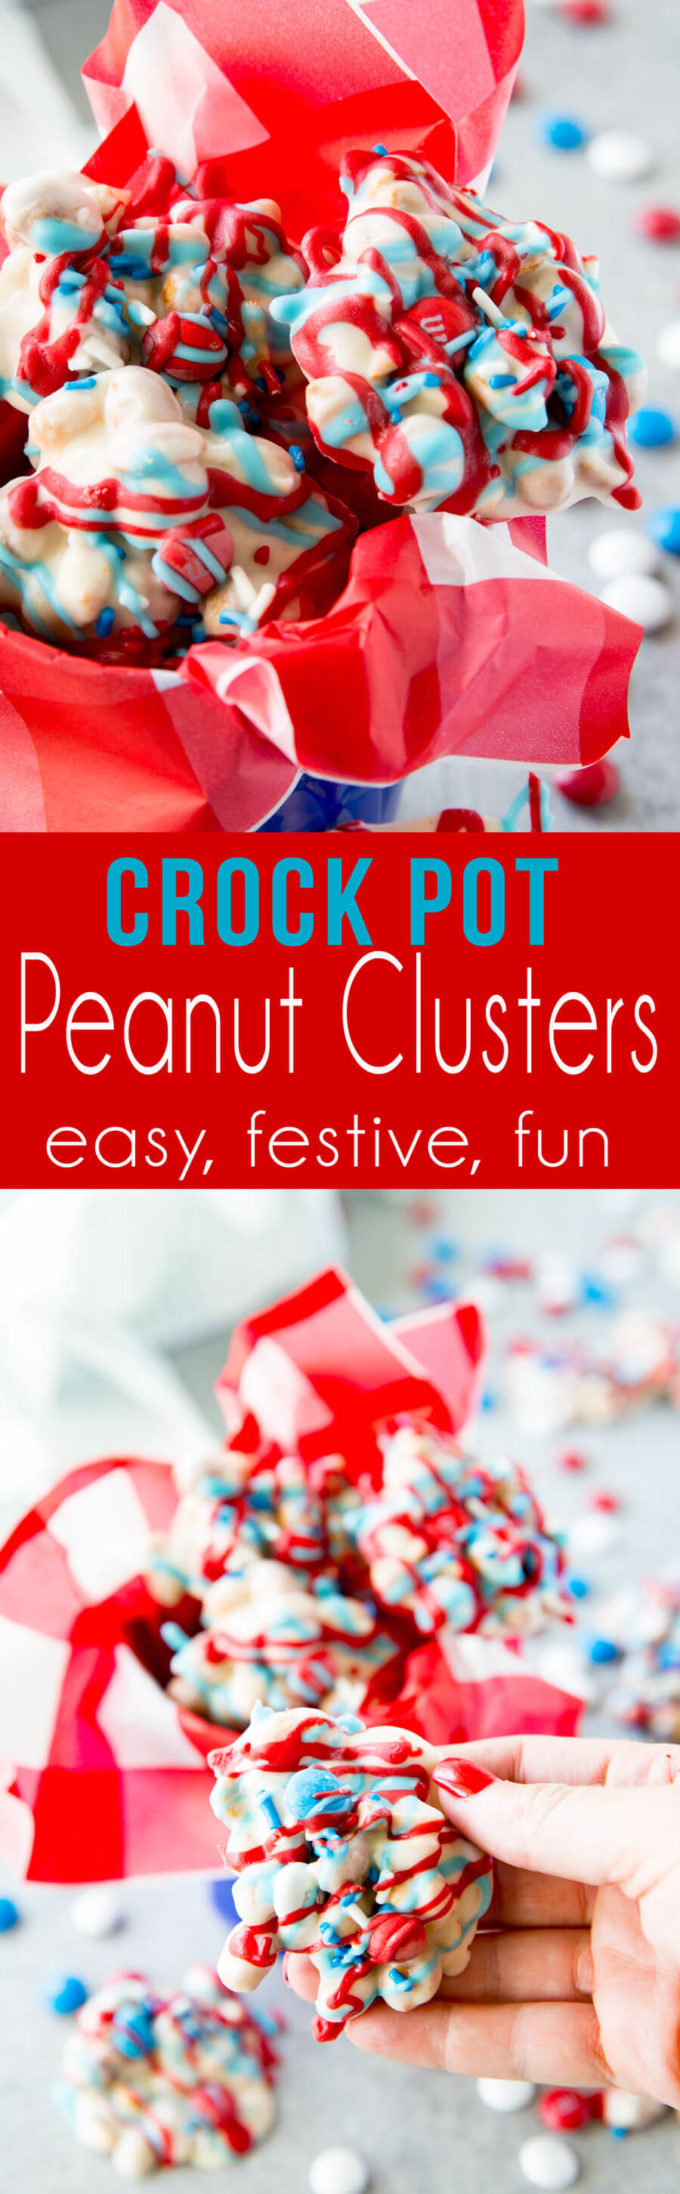 Crock Pot Candy: Peanut Clusters made festive